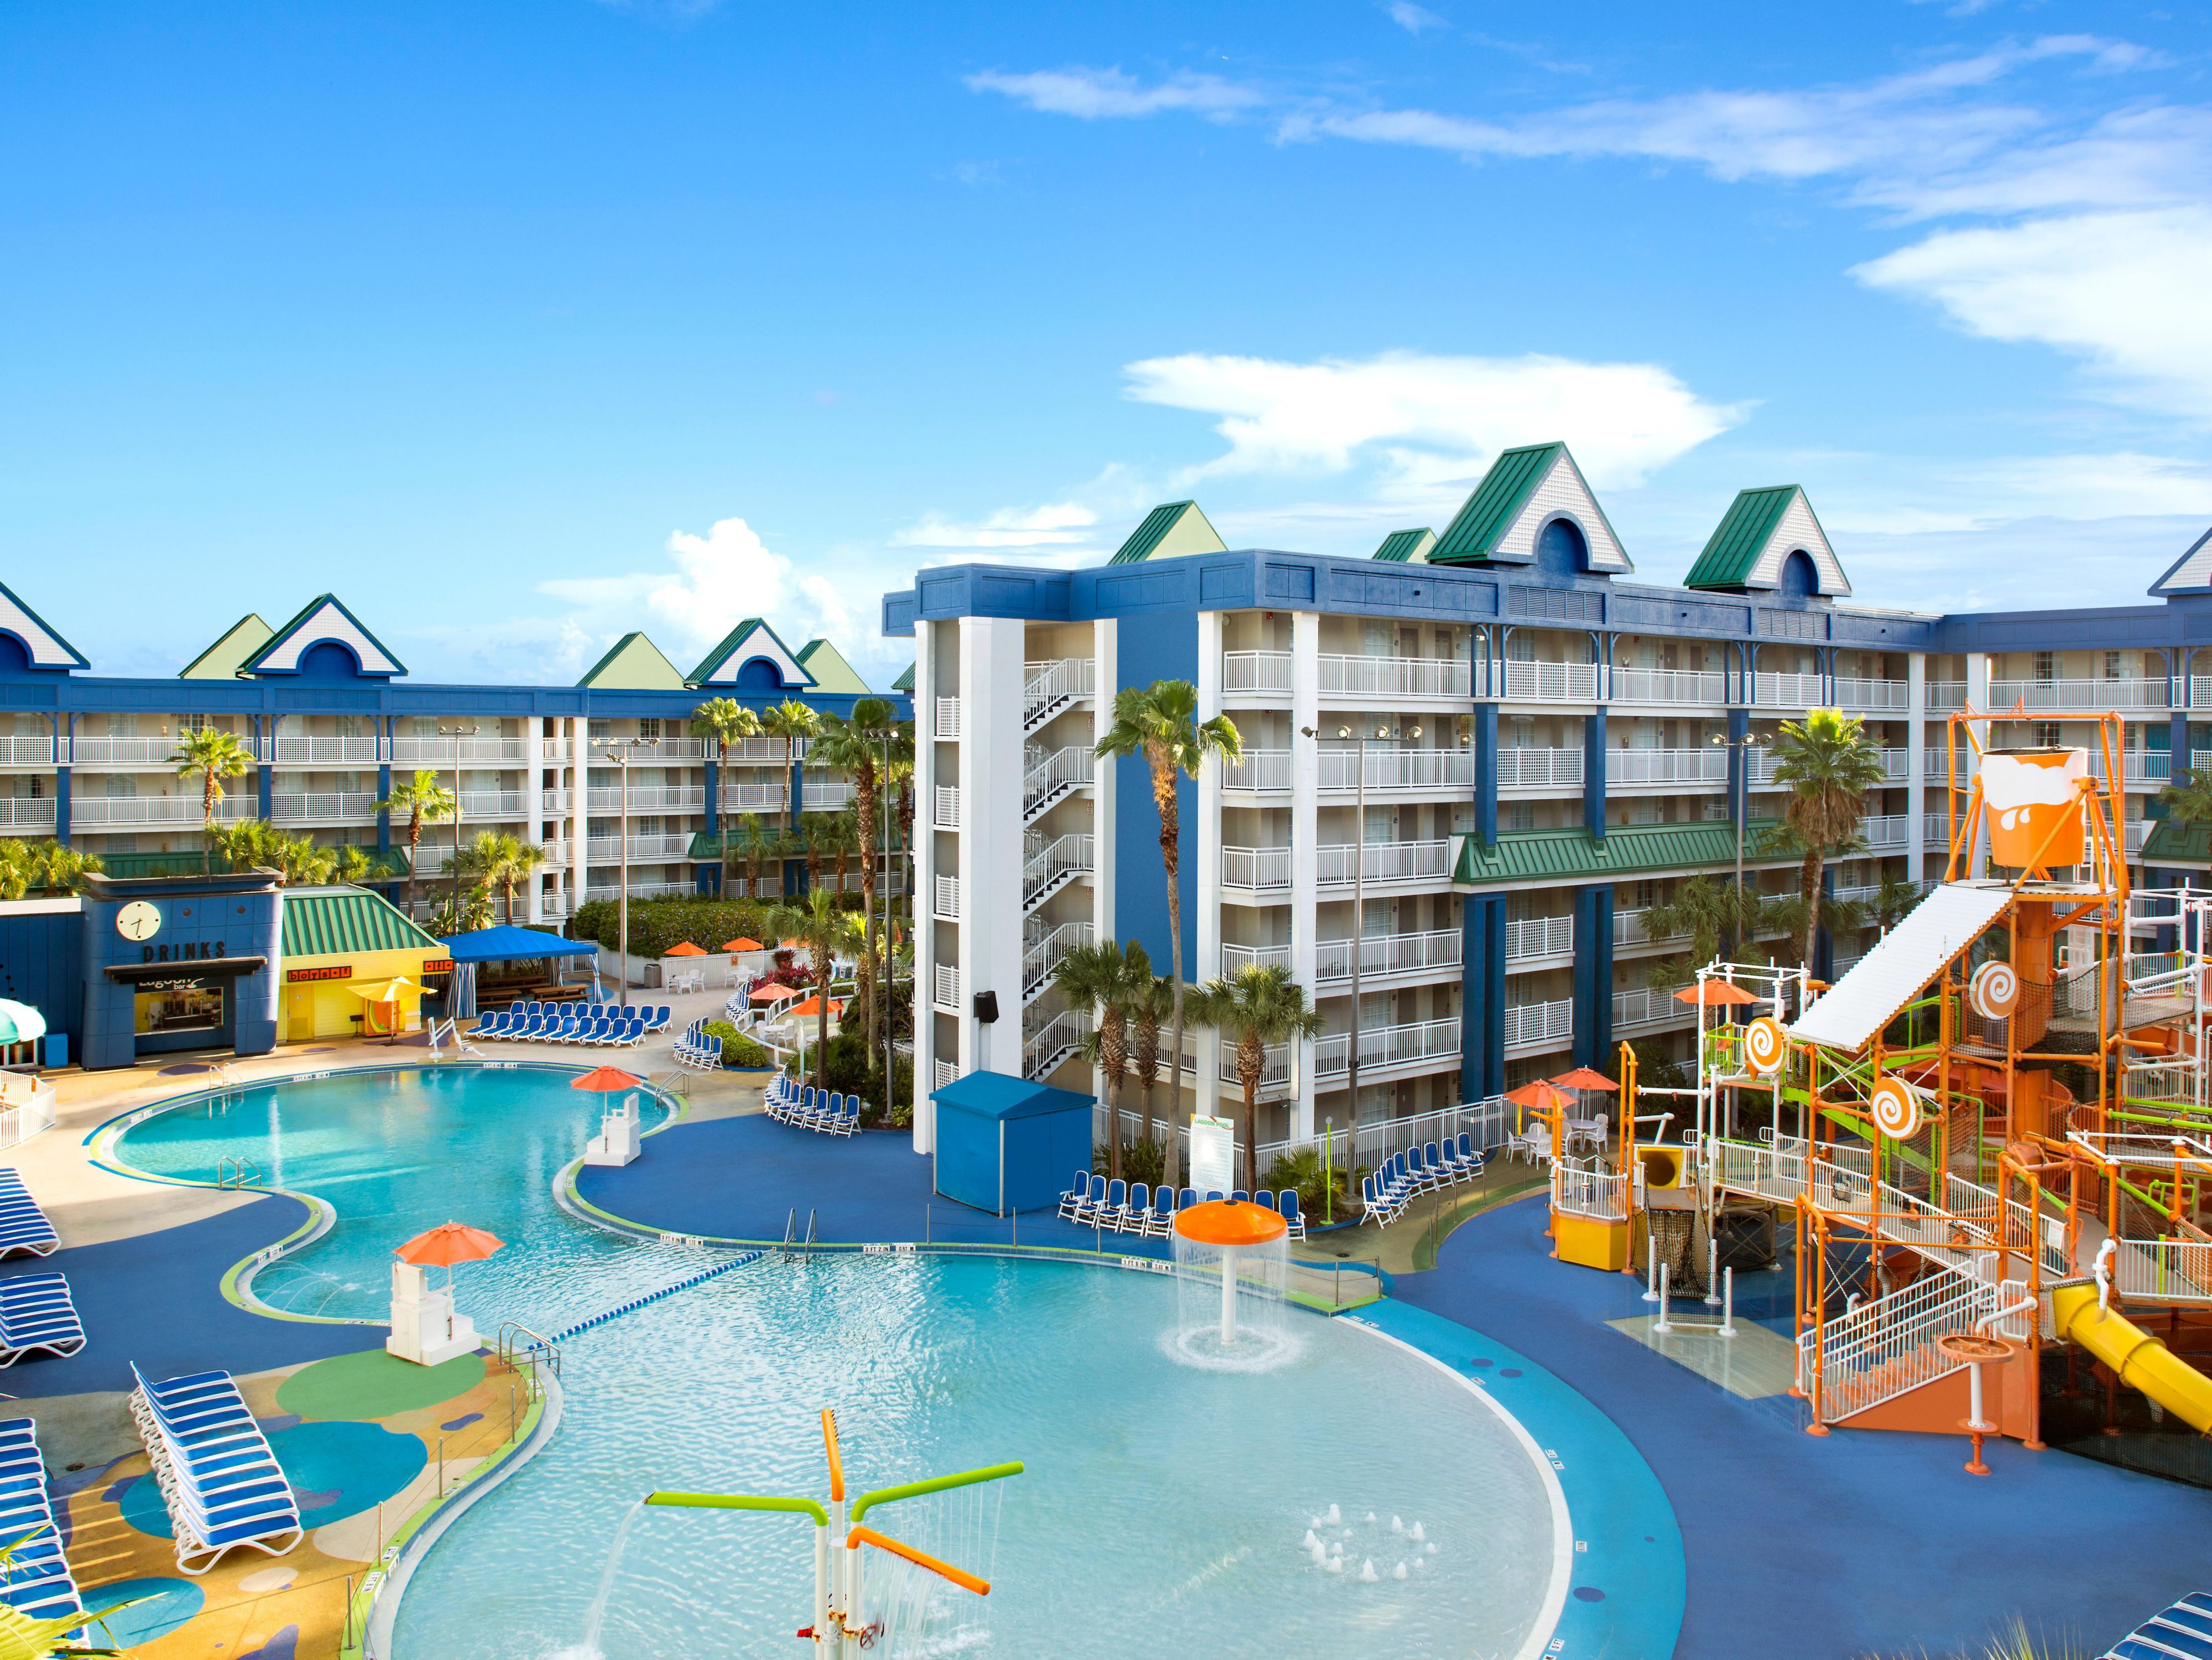 Holiday Inn Resort Orlando 4415944884 4x3